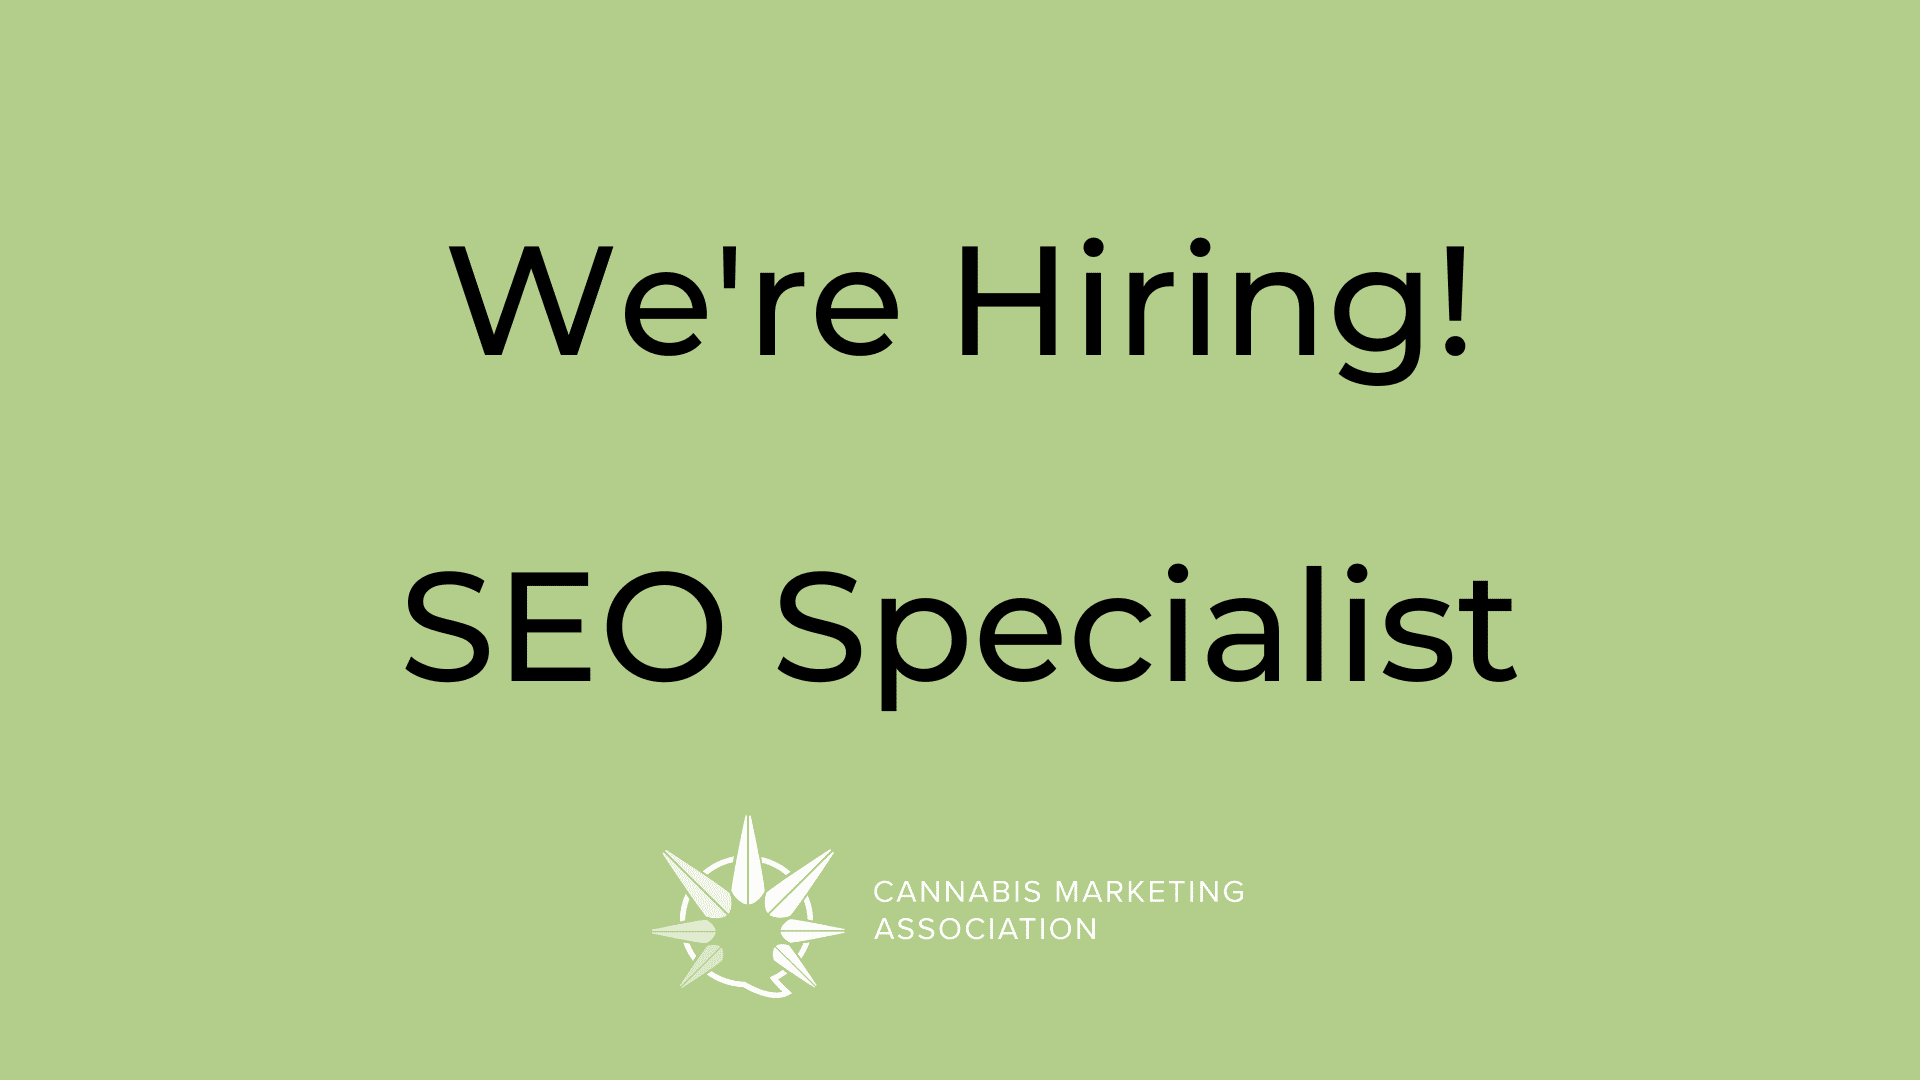 We’re hiring! SEO Specialist at Cannabis Marketing Association